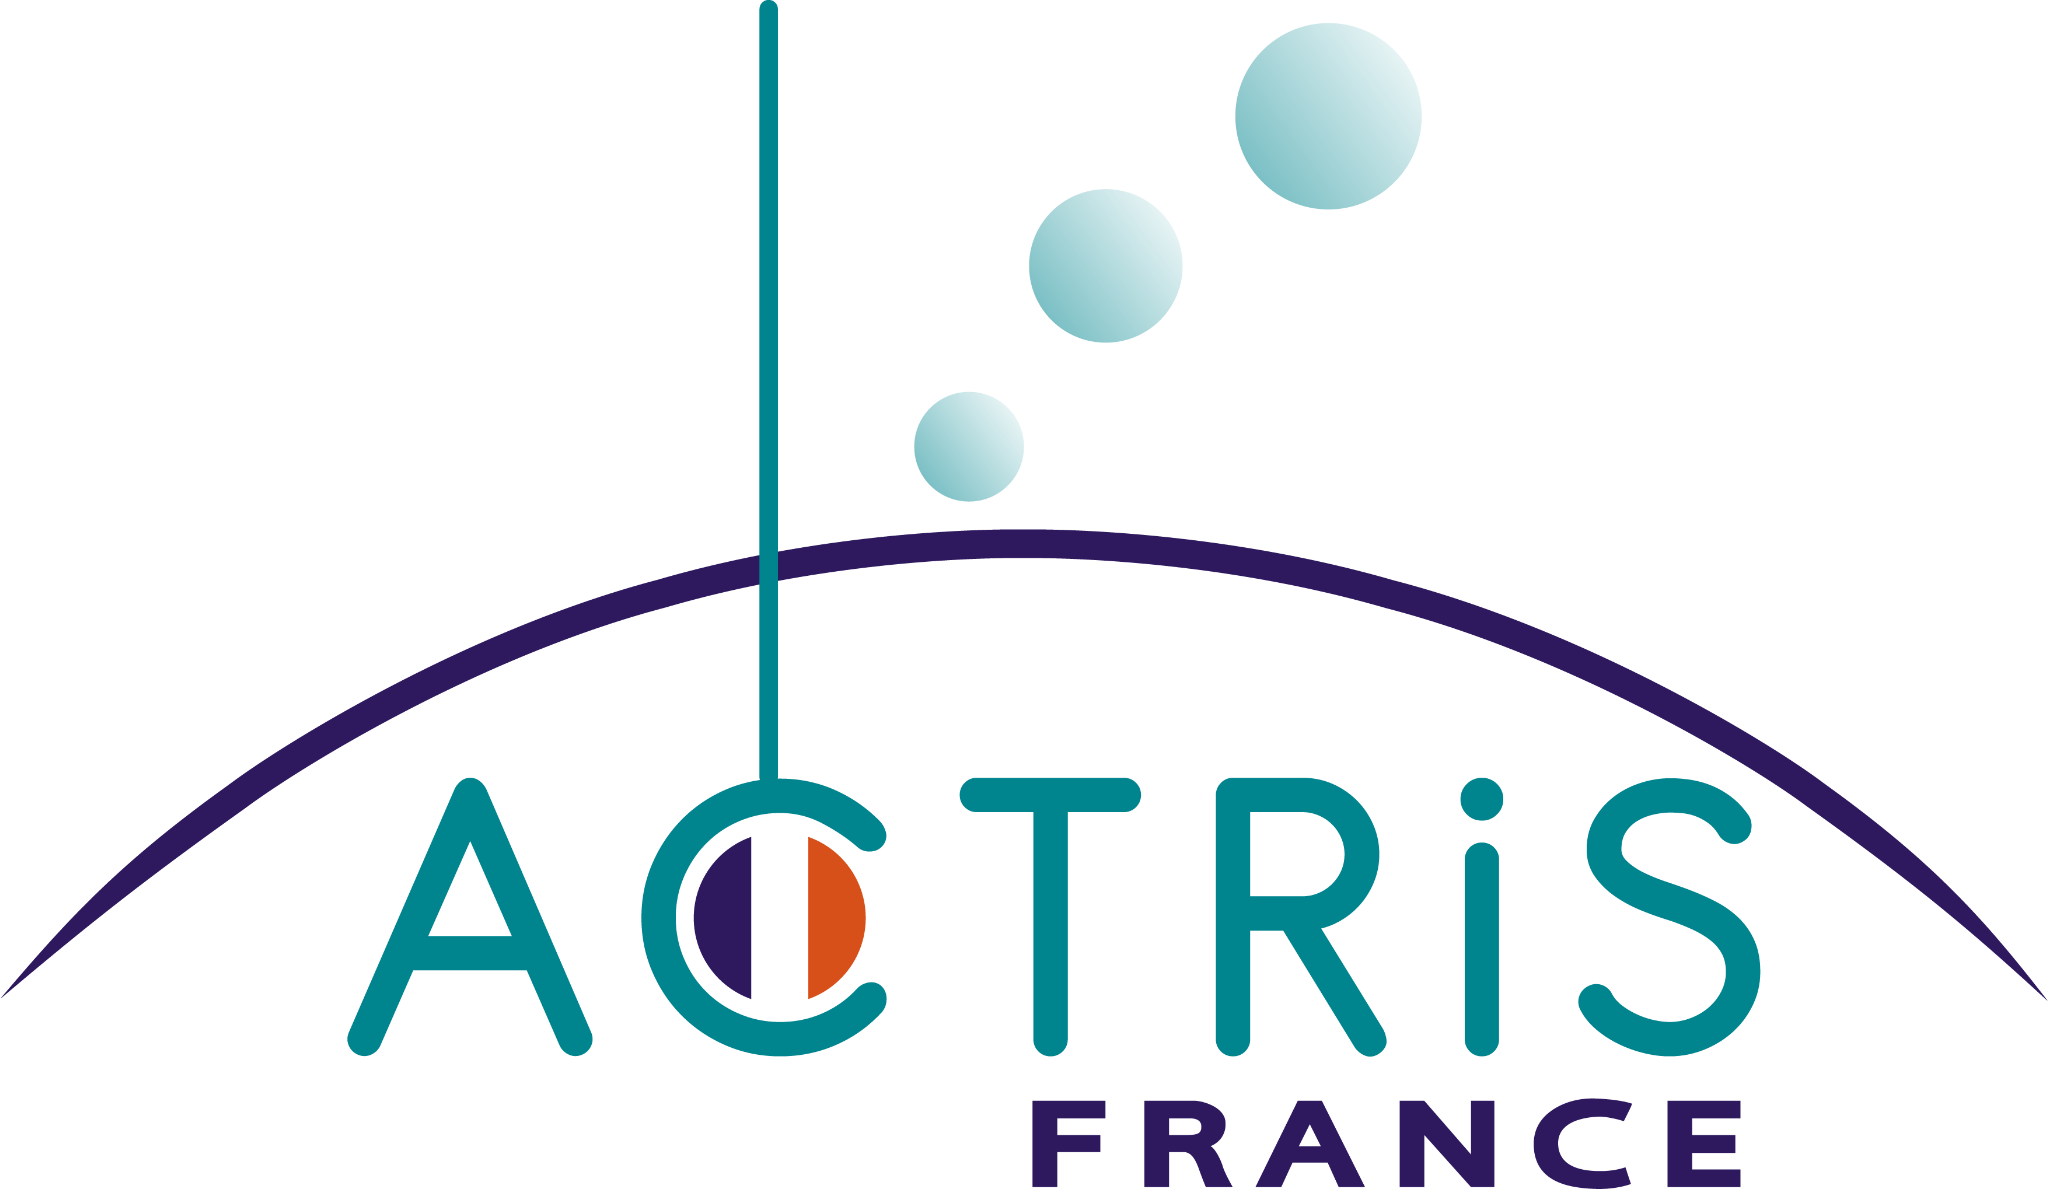 CATRIS France Sponsor